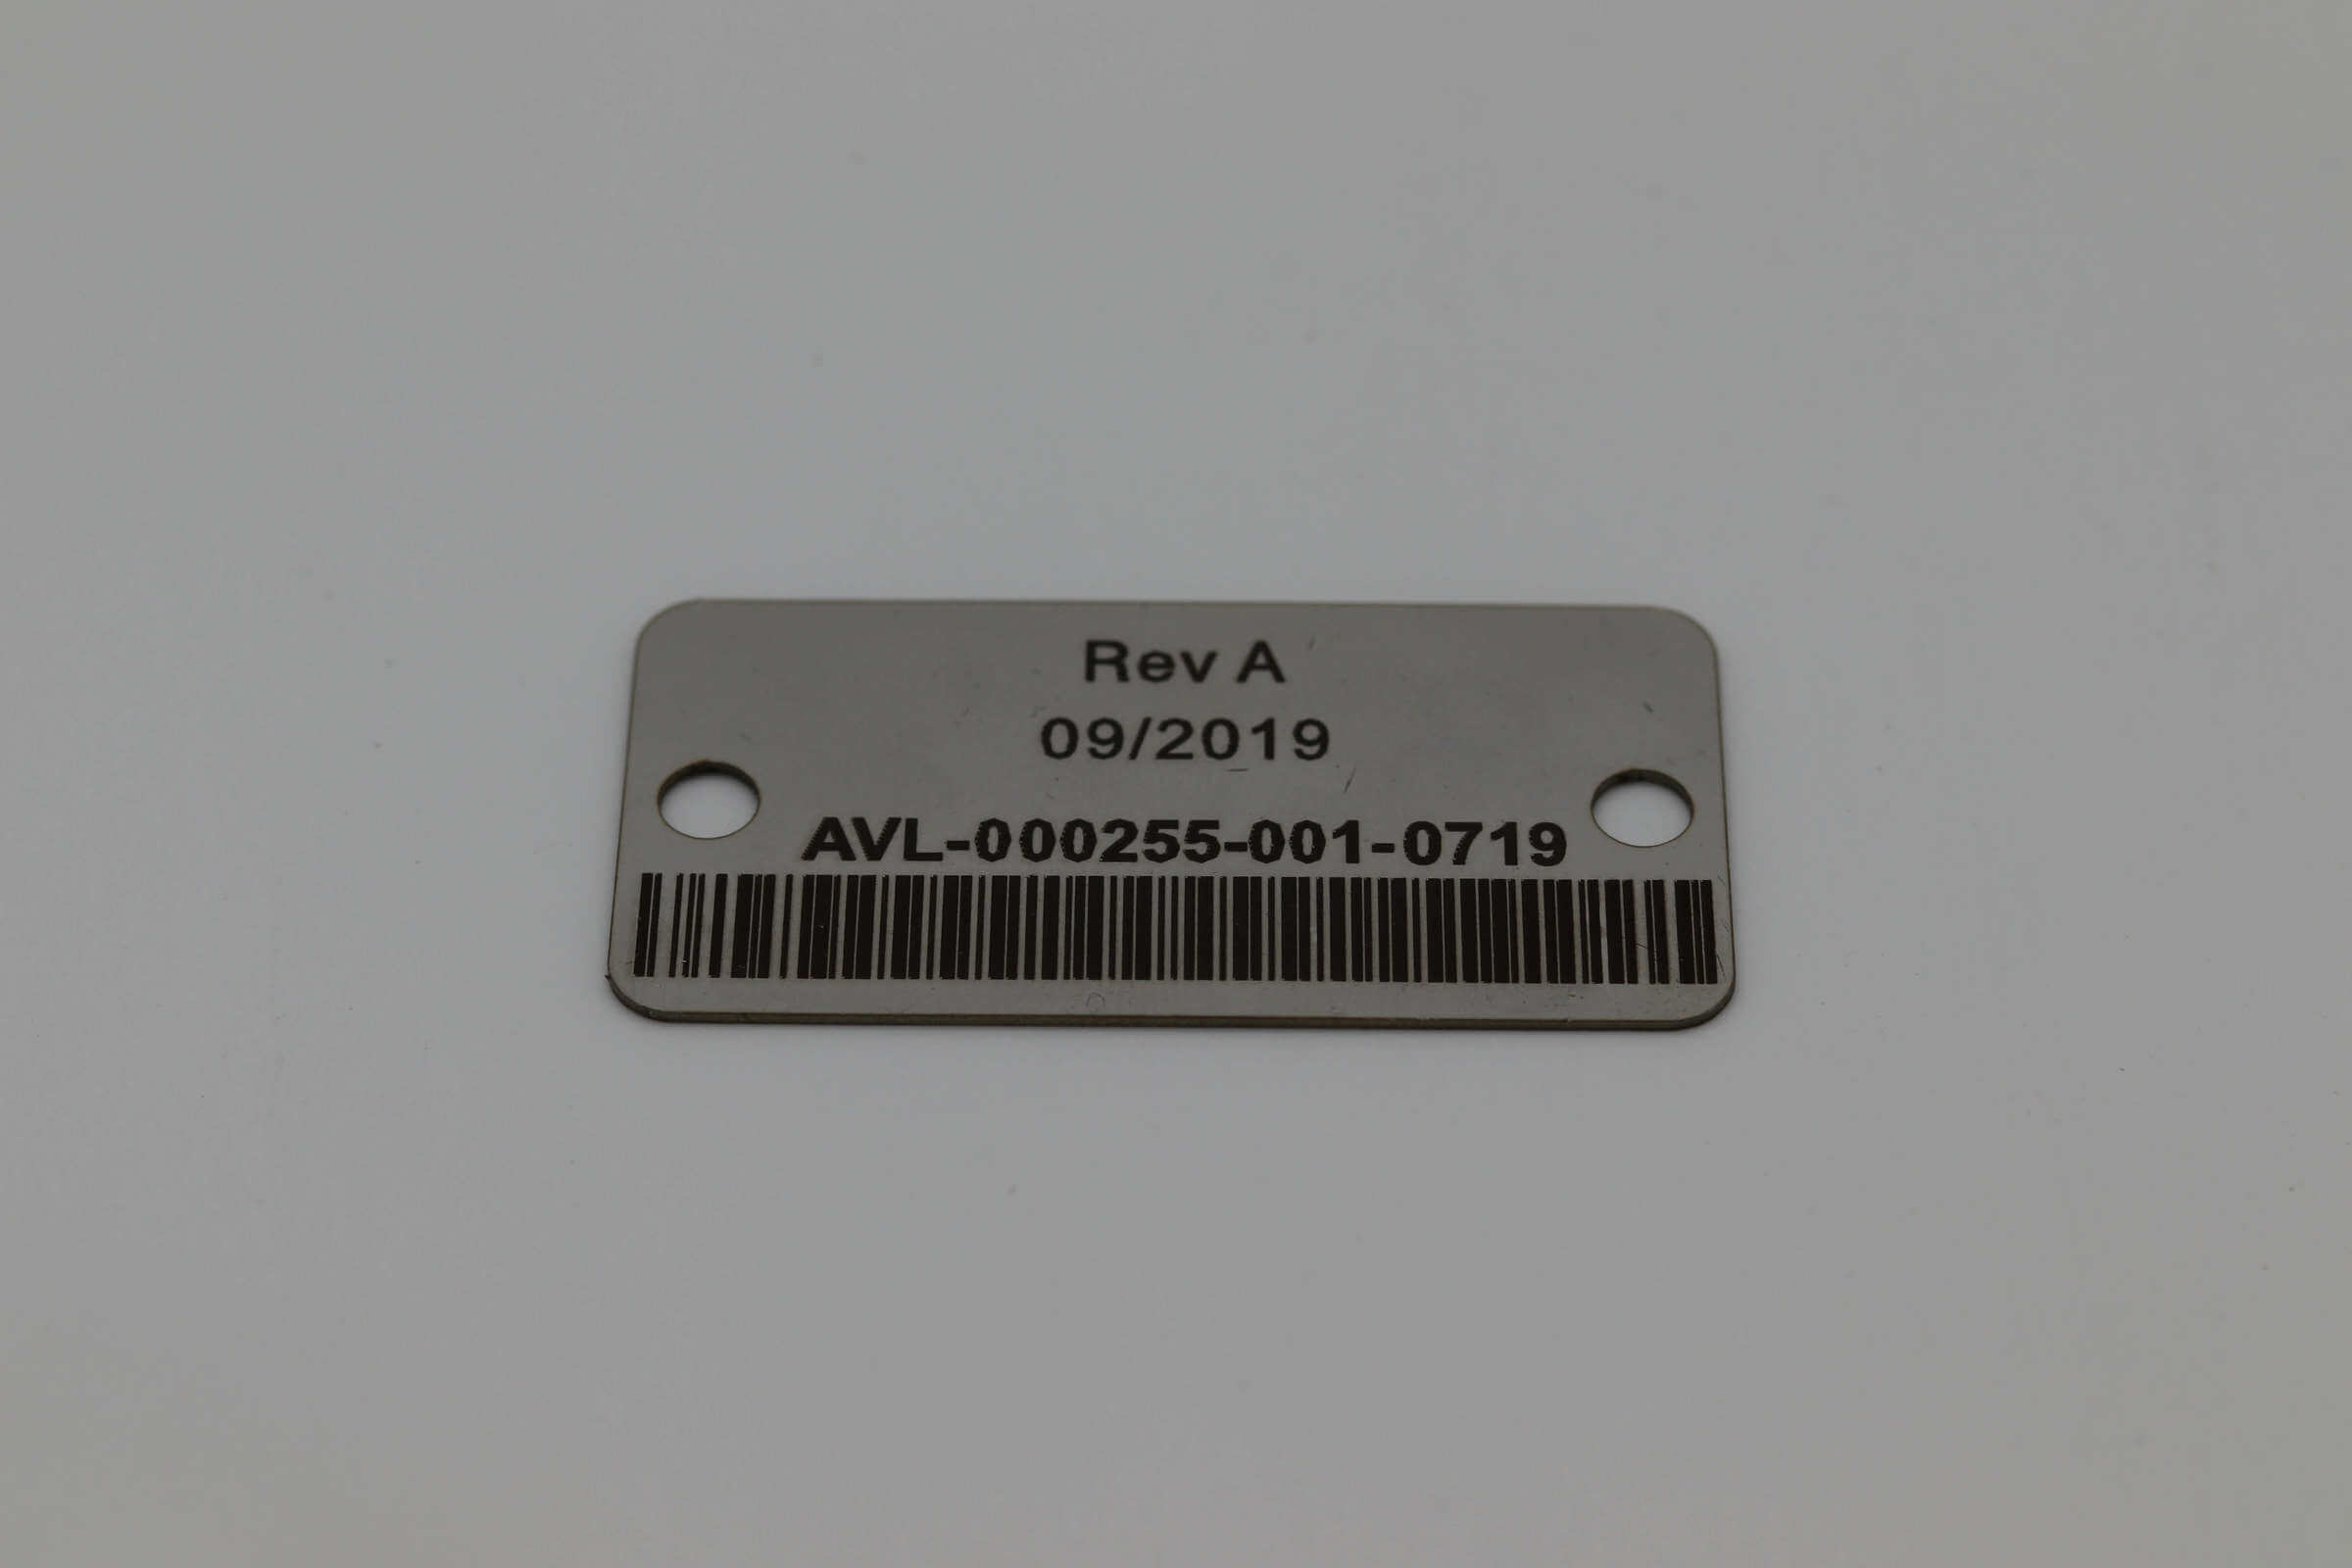 rectangular barcode tag